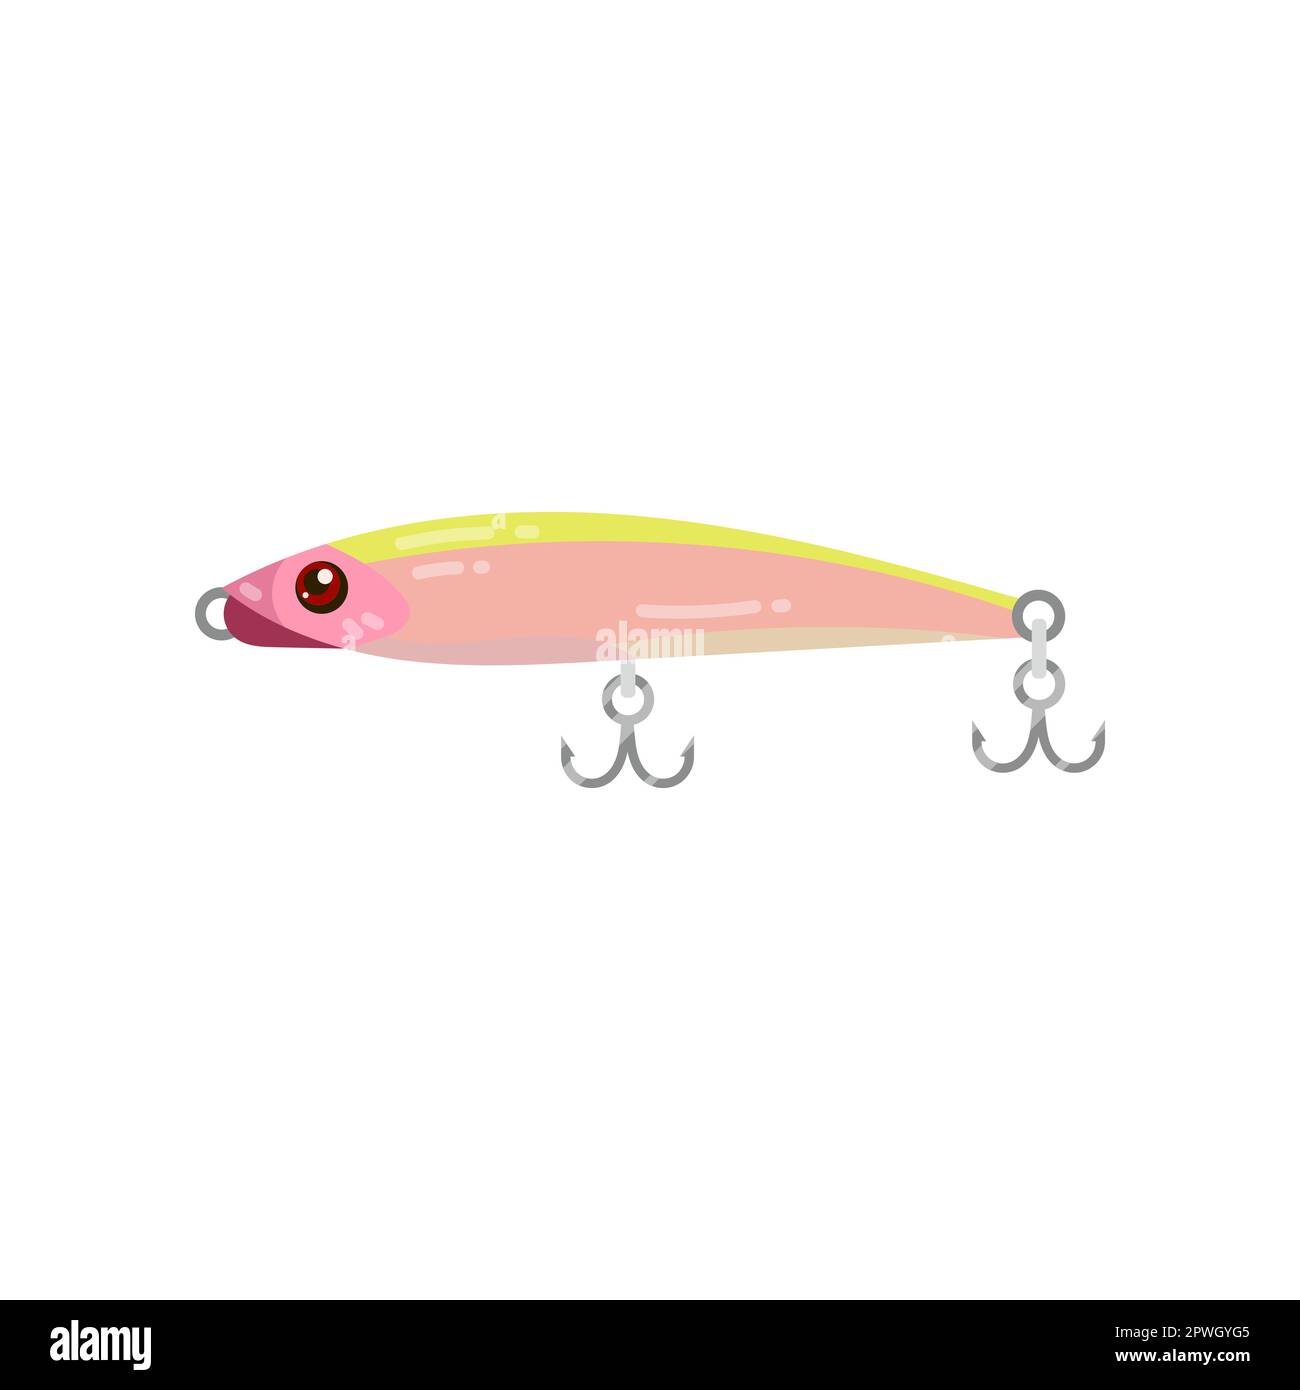 https://c8.alamy.com/comp/2PWGYG5/pink-fishing-bait-in-shape-of-fish-cartoon-illustration-2PWGYG5.jpg